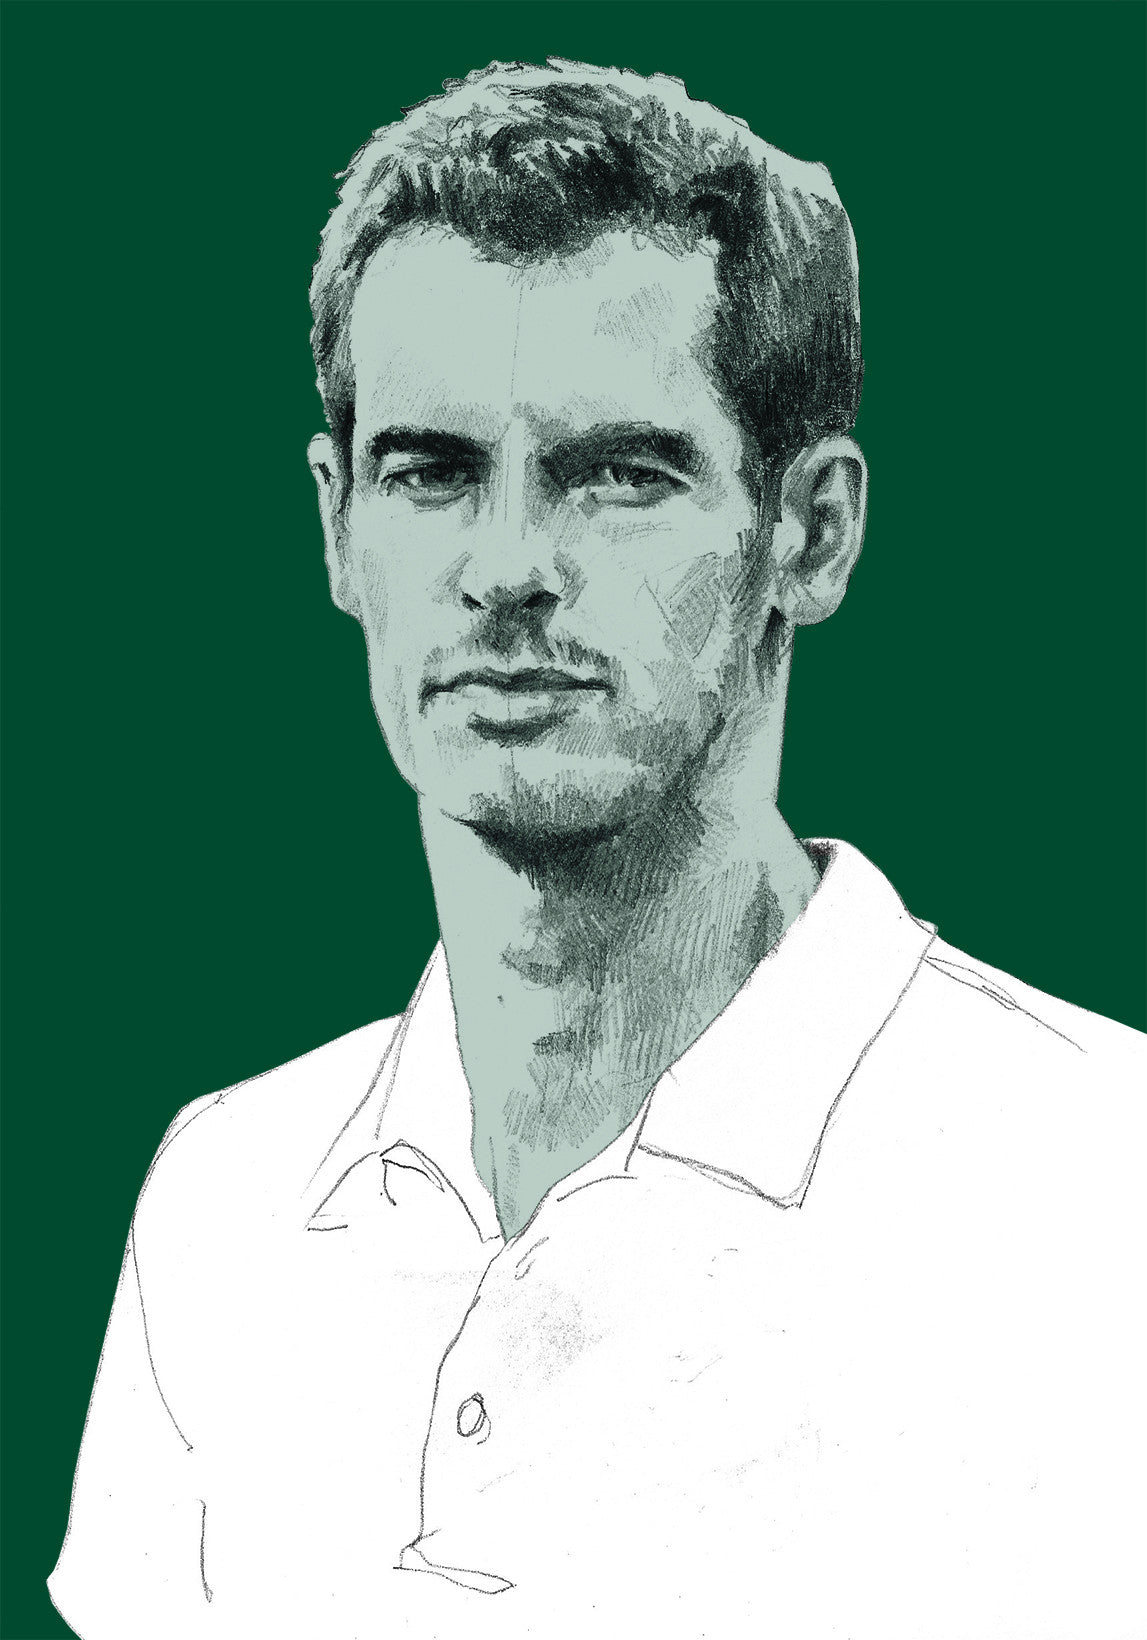 PlayBrave profiles: Sir Andy Murray